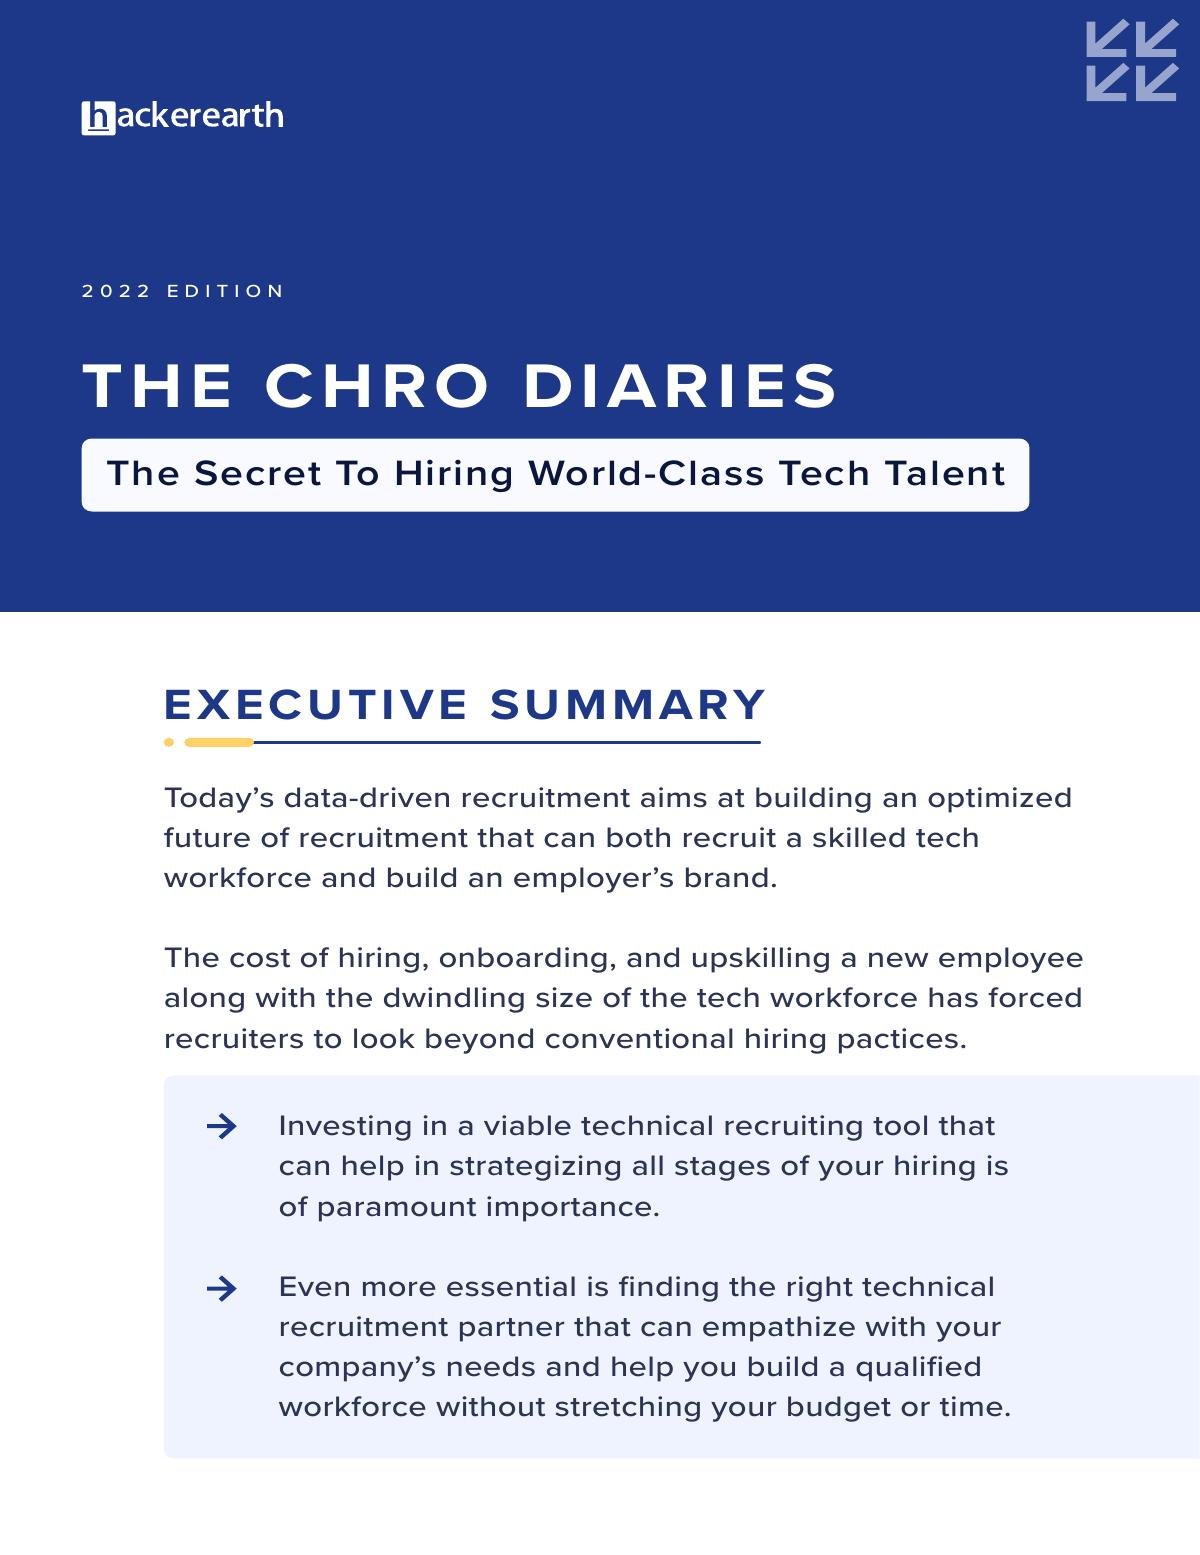 THE CHRO DIARIES: The Secret To Hiring World-Class Tech Talent